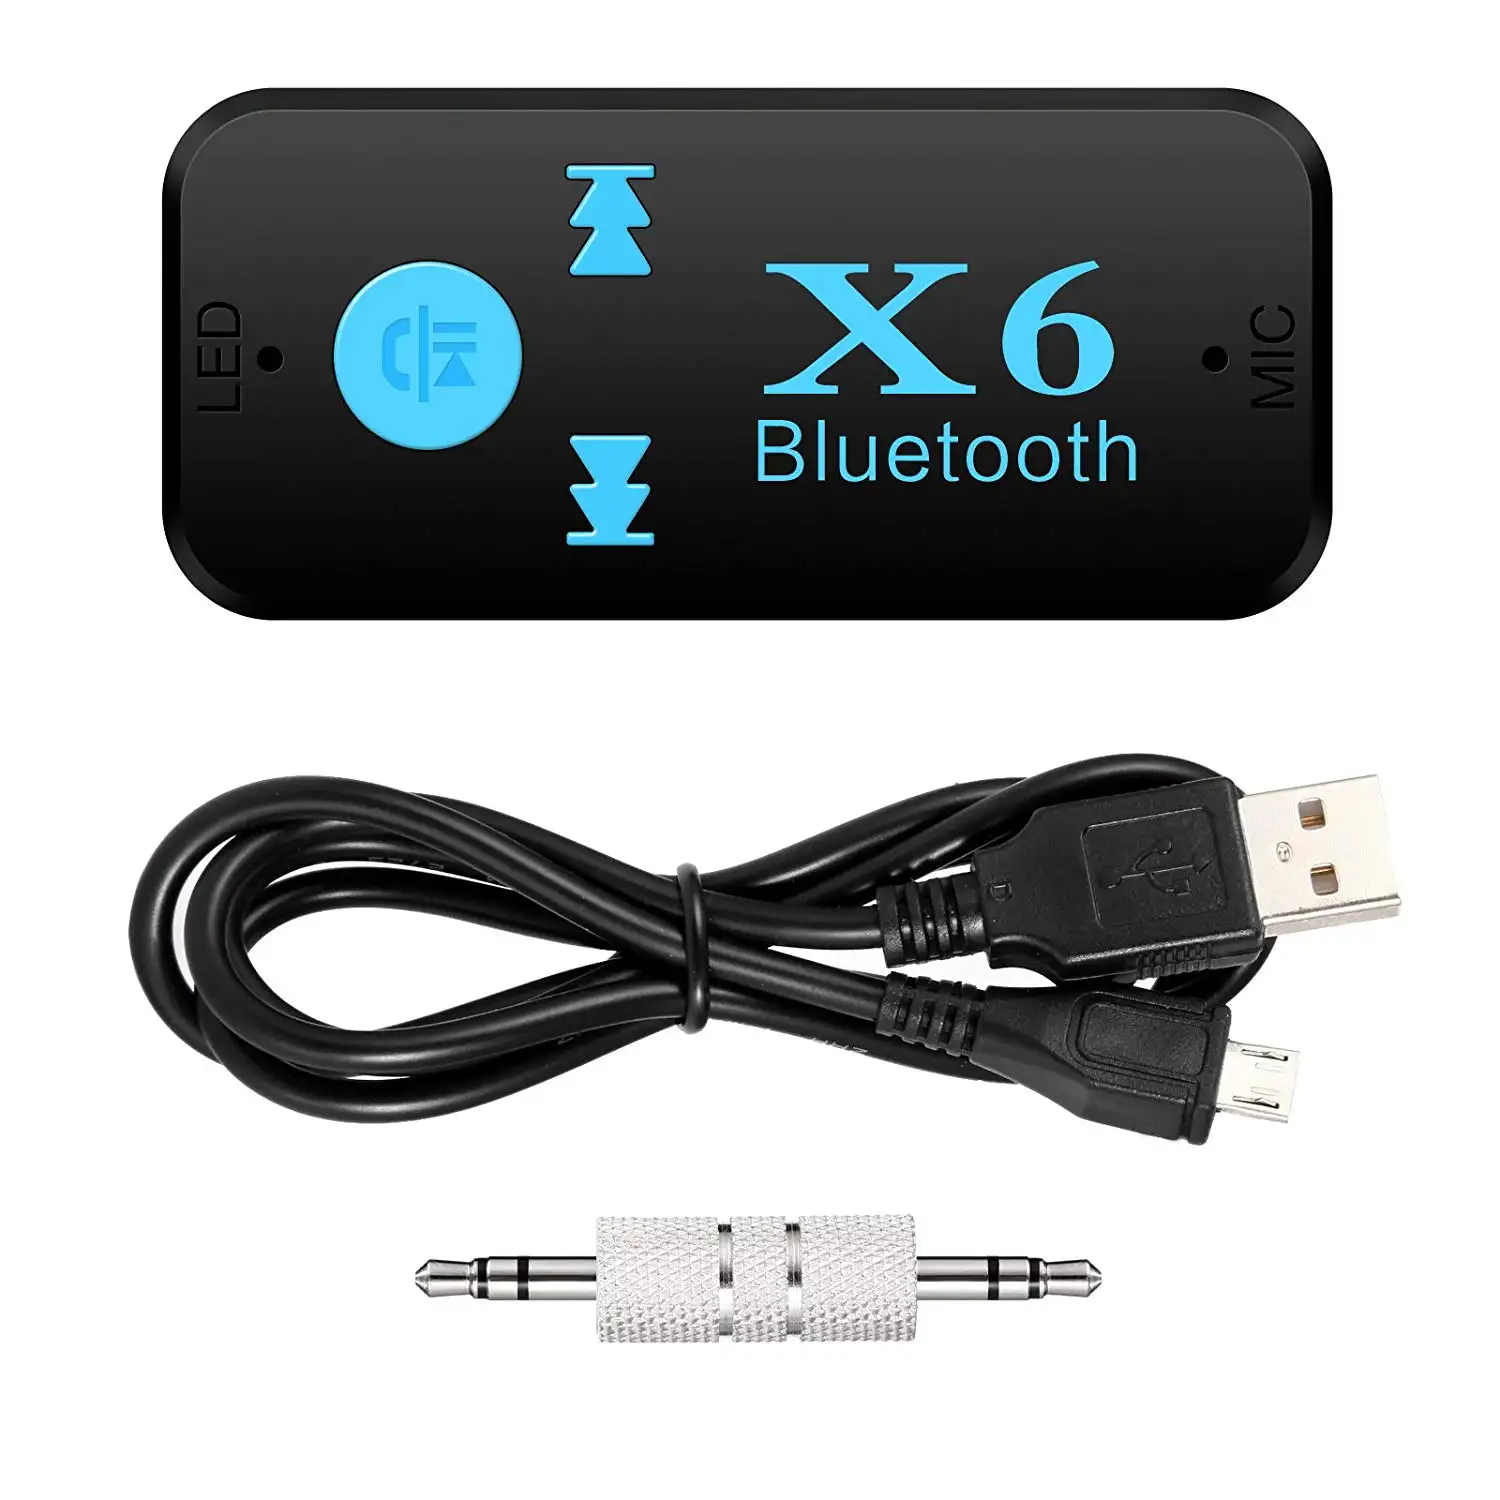 Higi X6 Bluetooth Receiver dengan Tf Kartu Portabel Nirkabel 3.5 Mm Jack Audio Musik Bluetooth Adaptor Receiver untuk Mobil